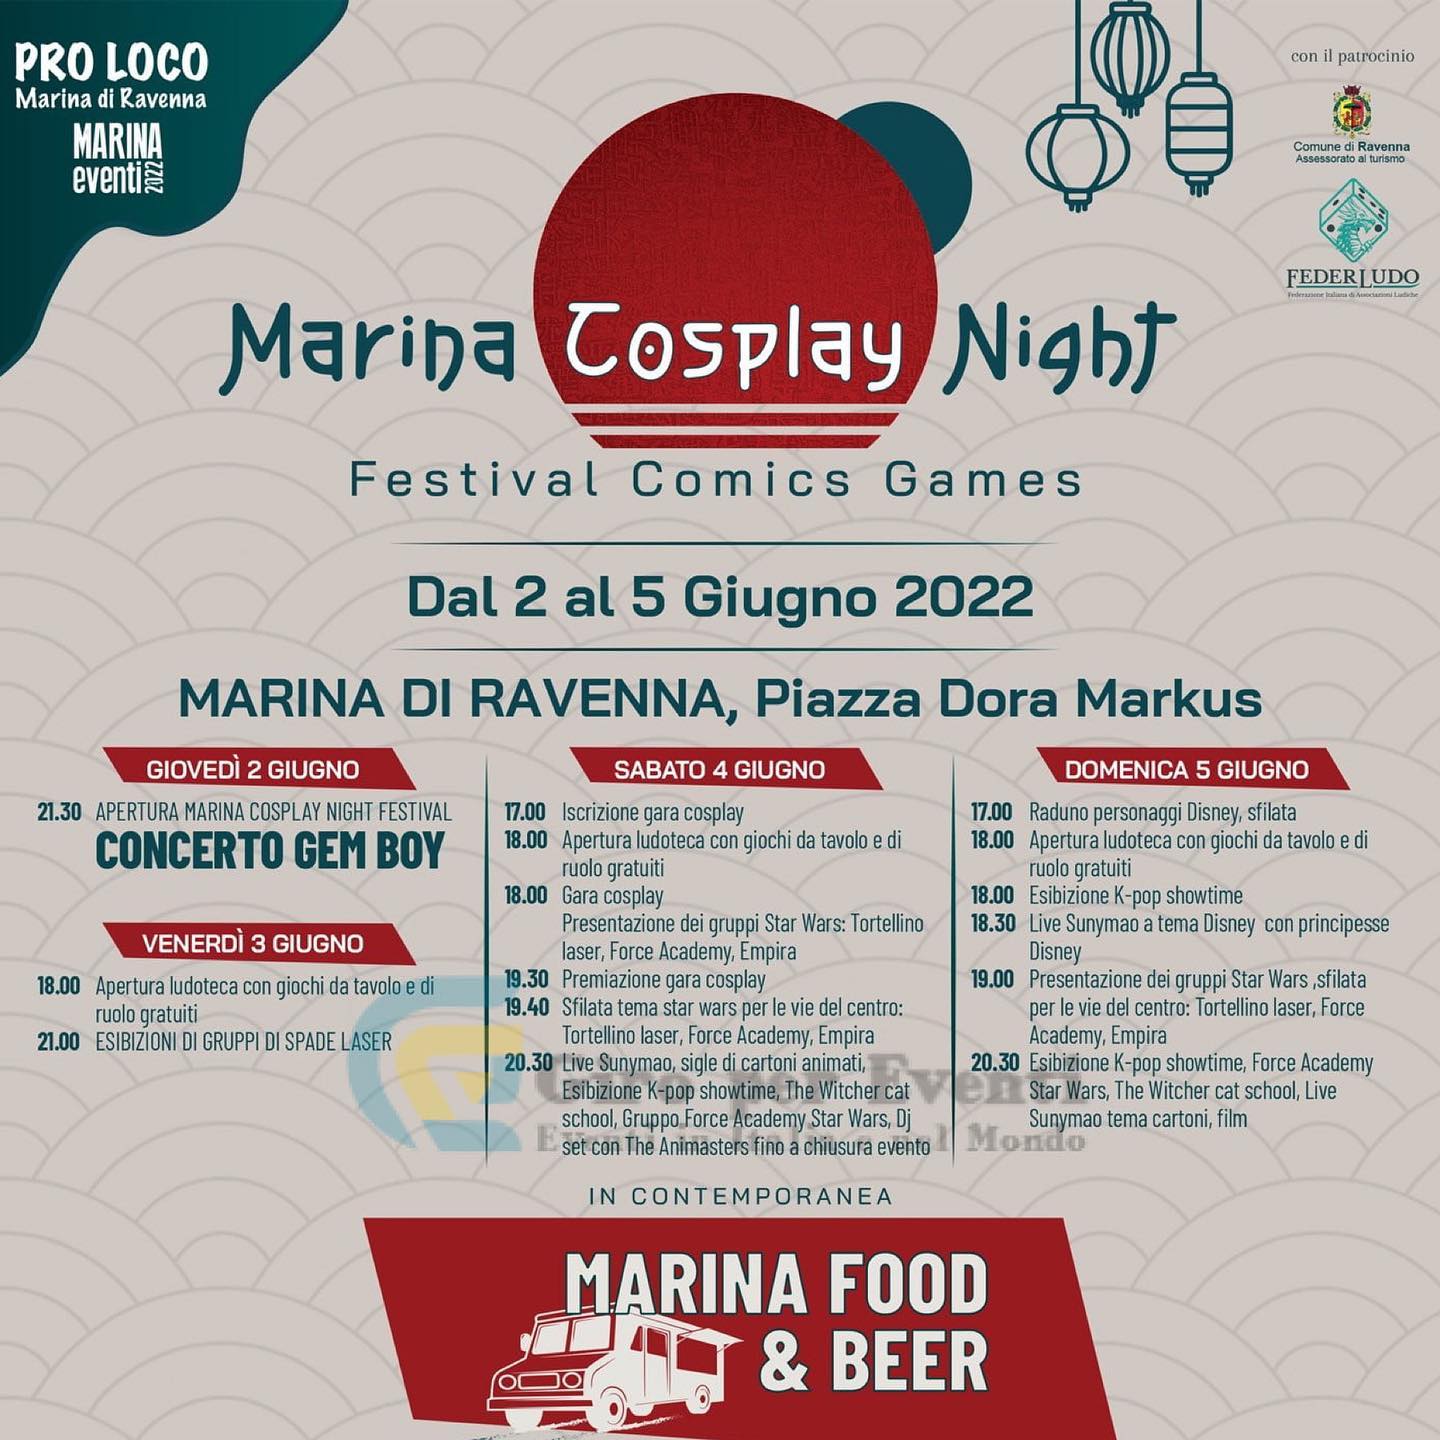 Marina Cosplay 
Empira

